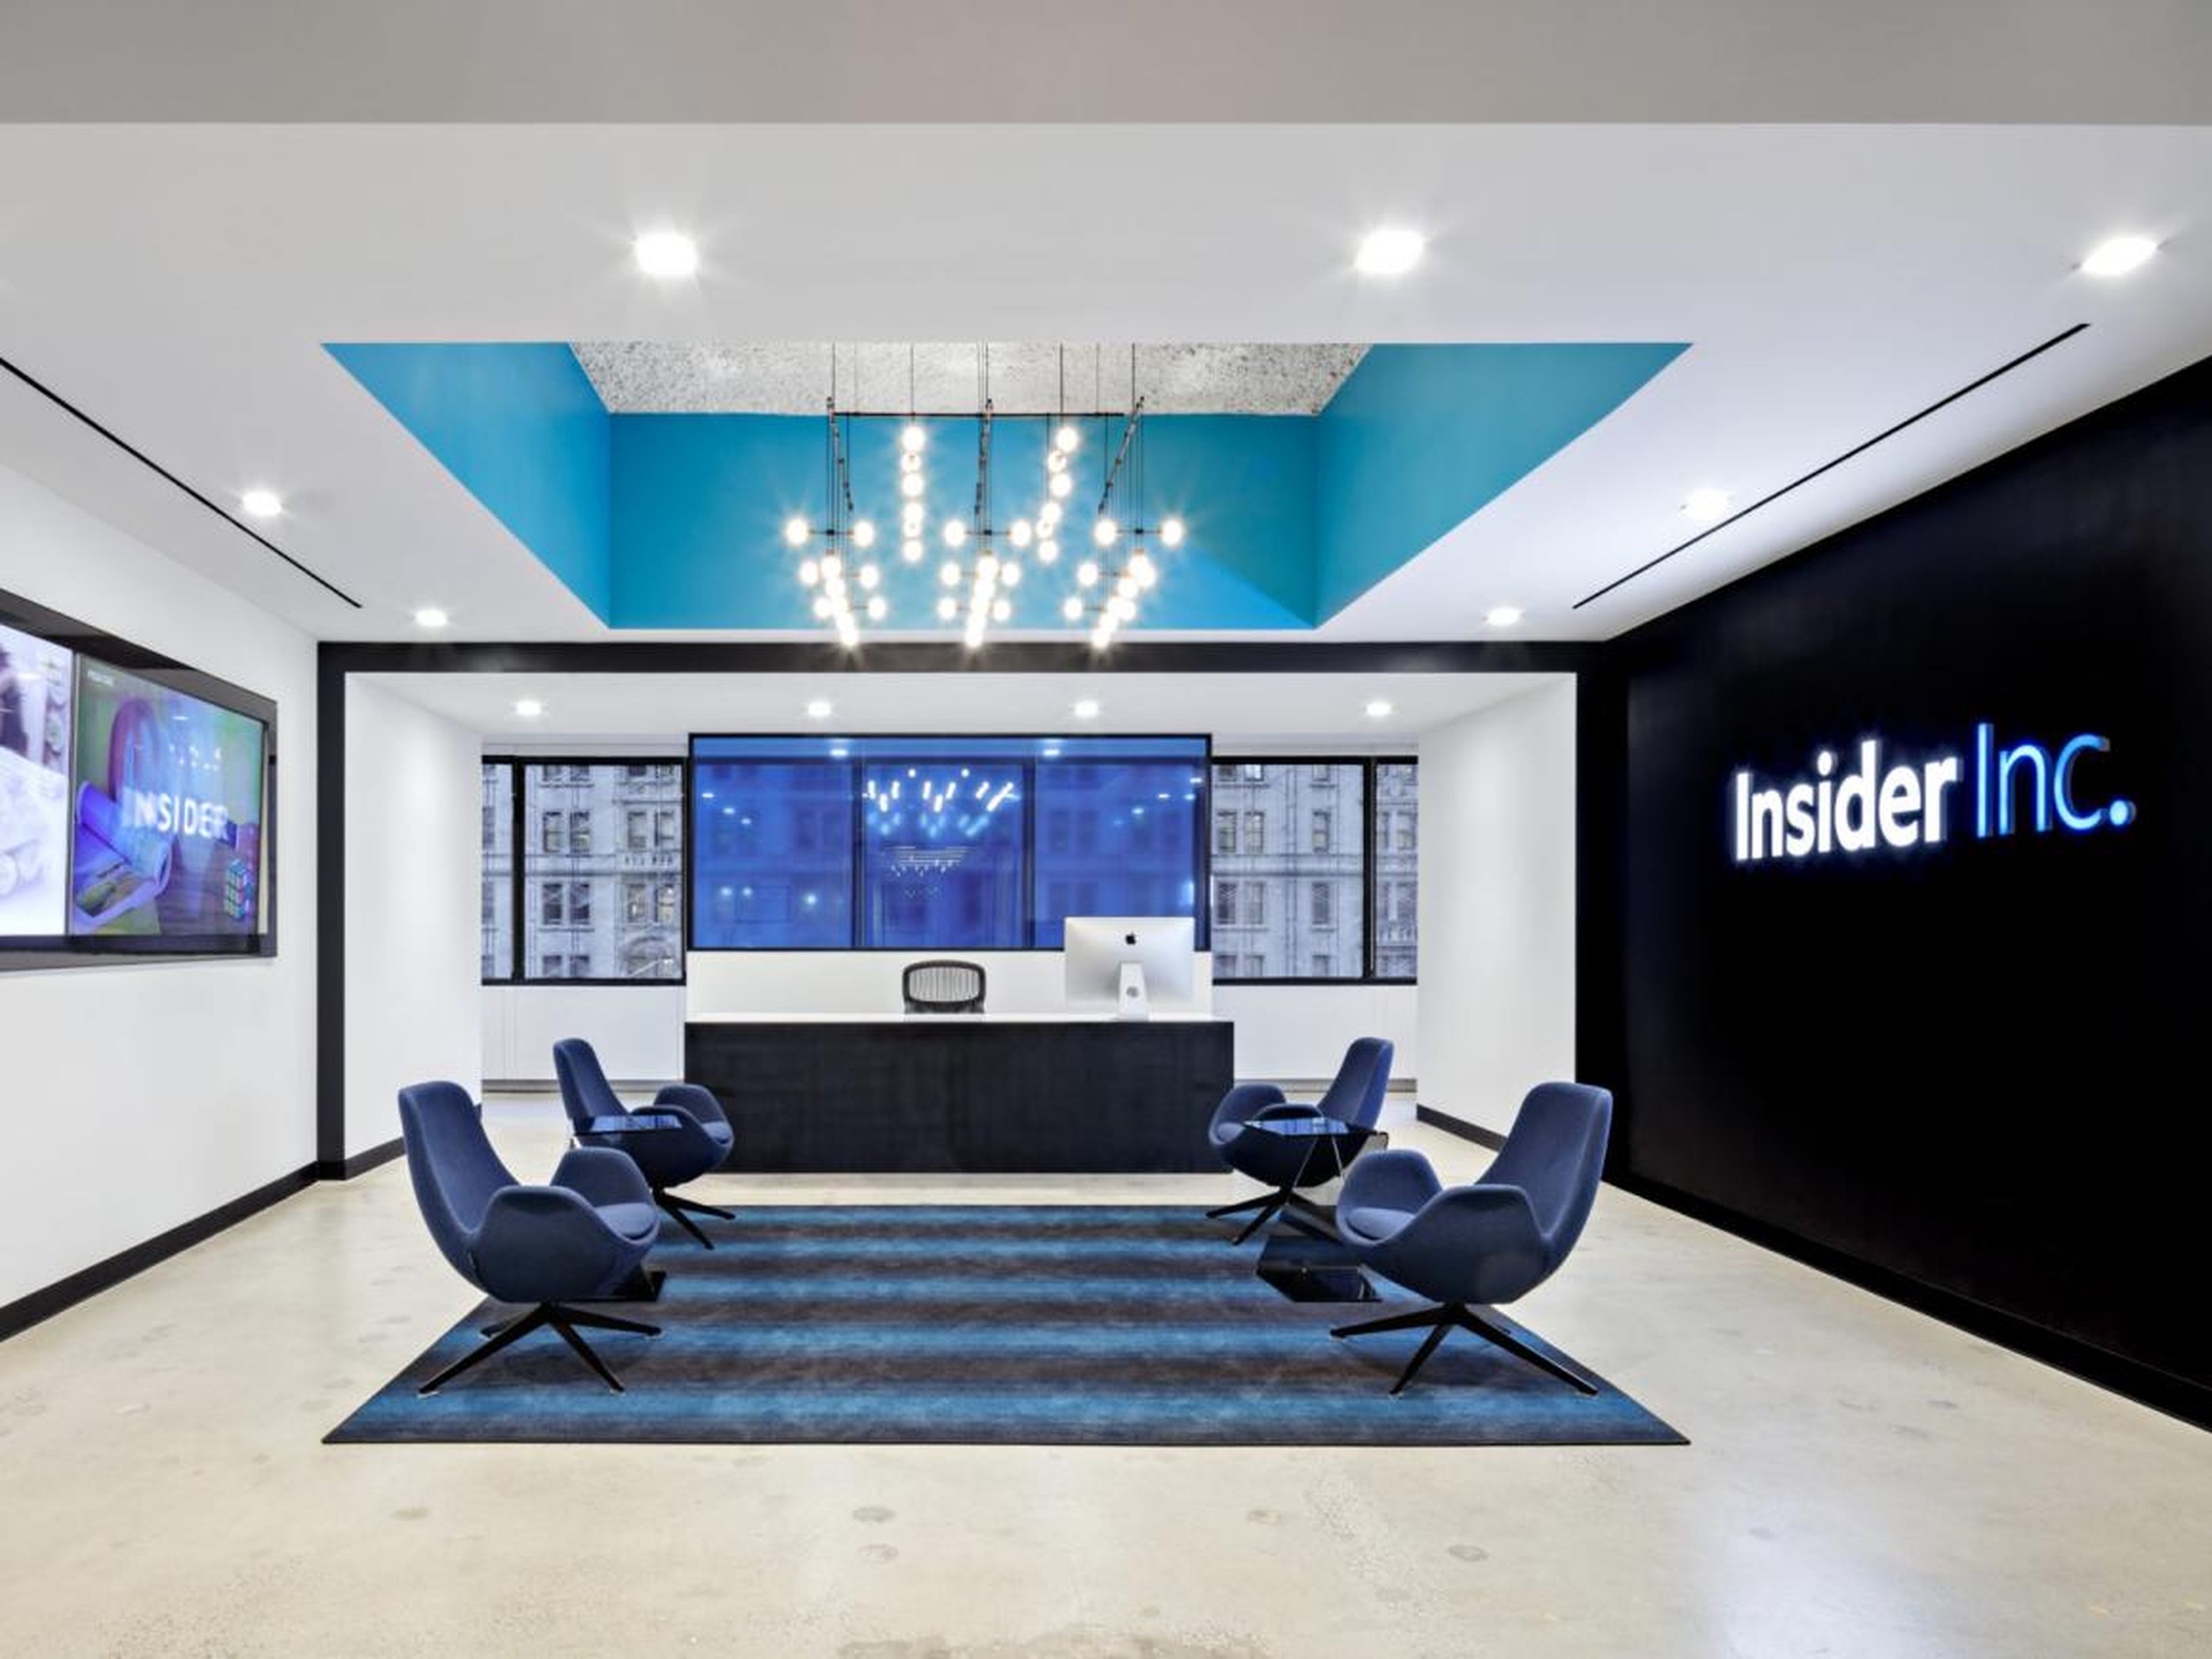 Insider Inc.'s office.